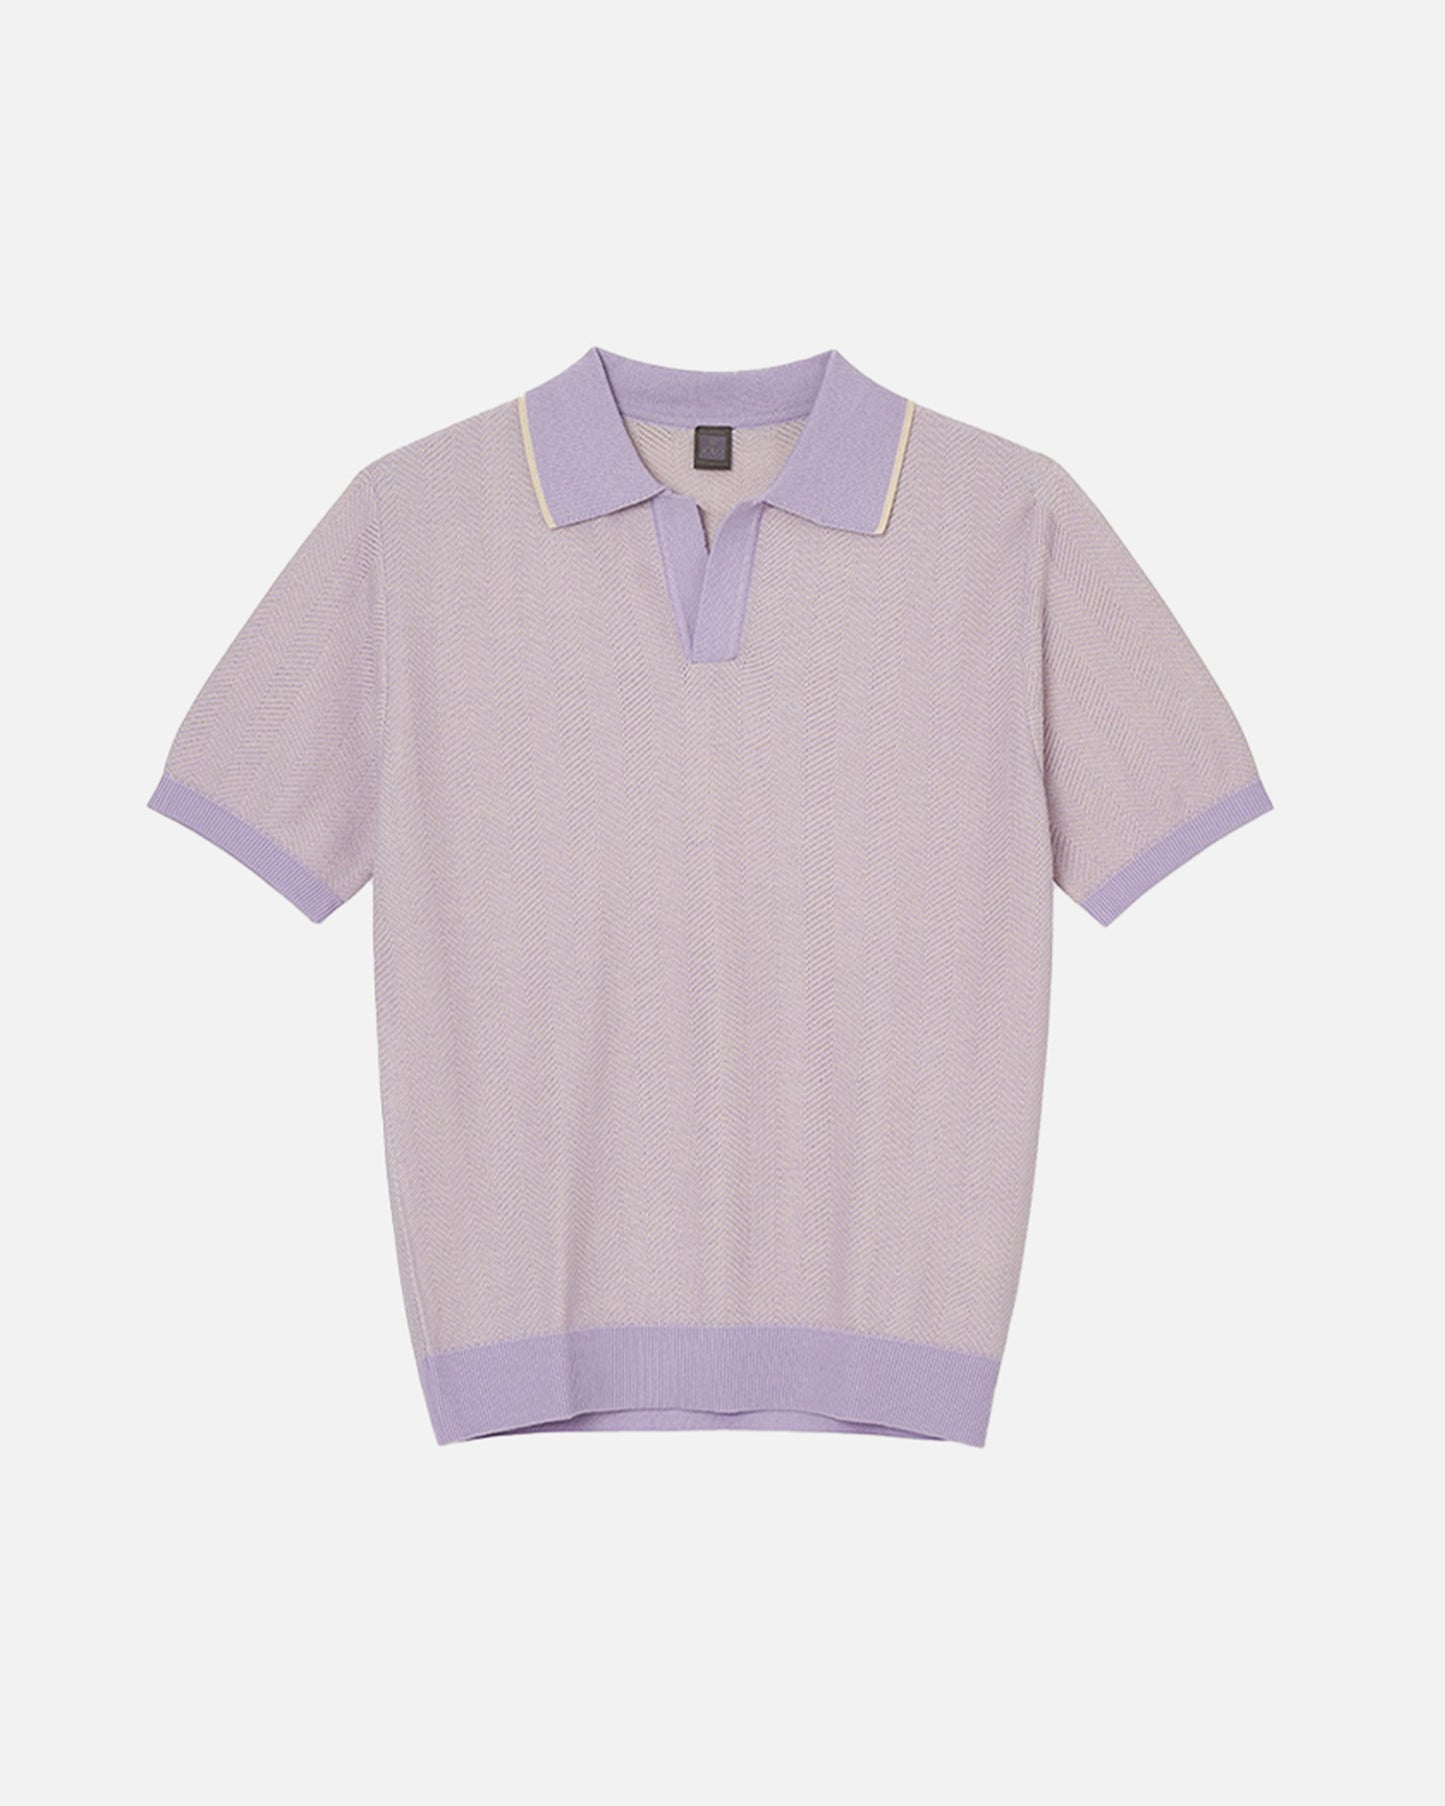 Iolo Herringbone Half Collar Polo Shirt Lavender